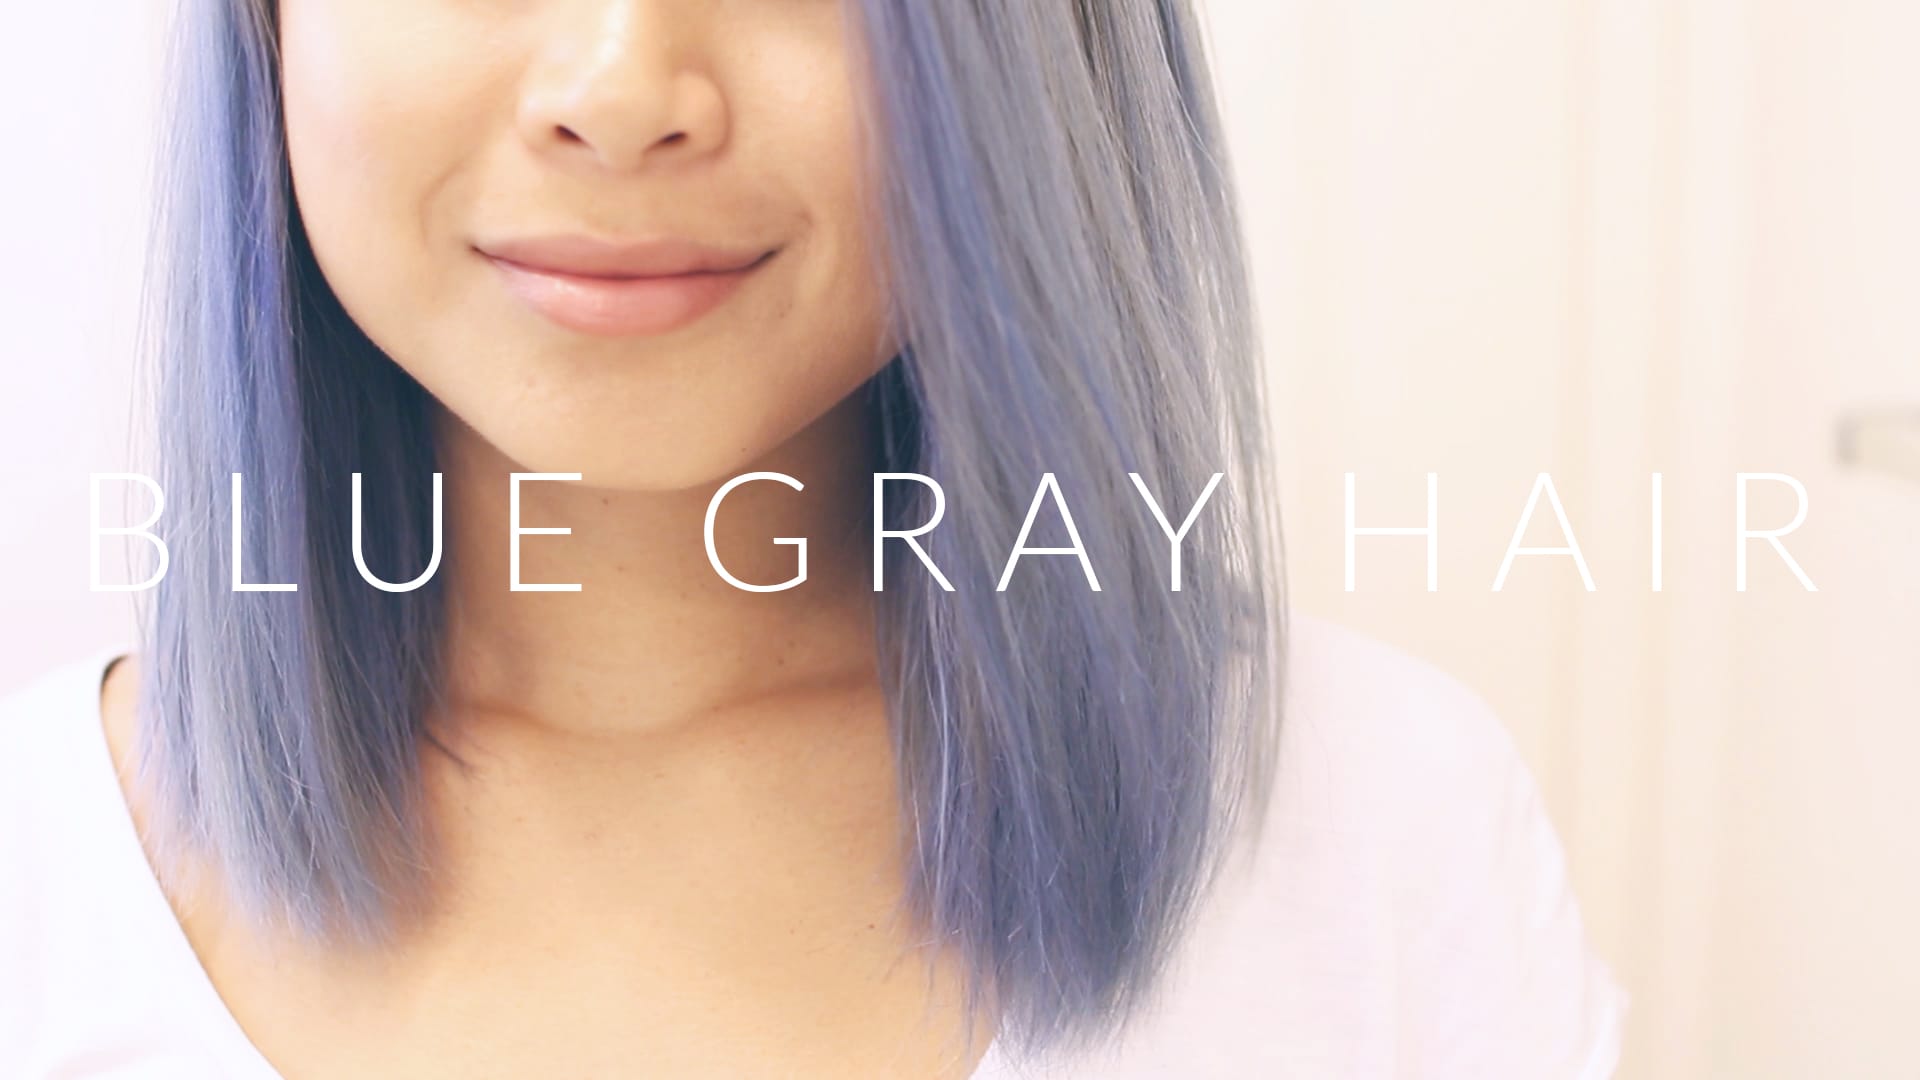 Blue Gray Hair Blog on Tumblr - wide 7